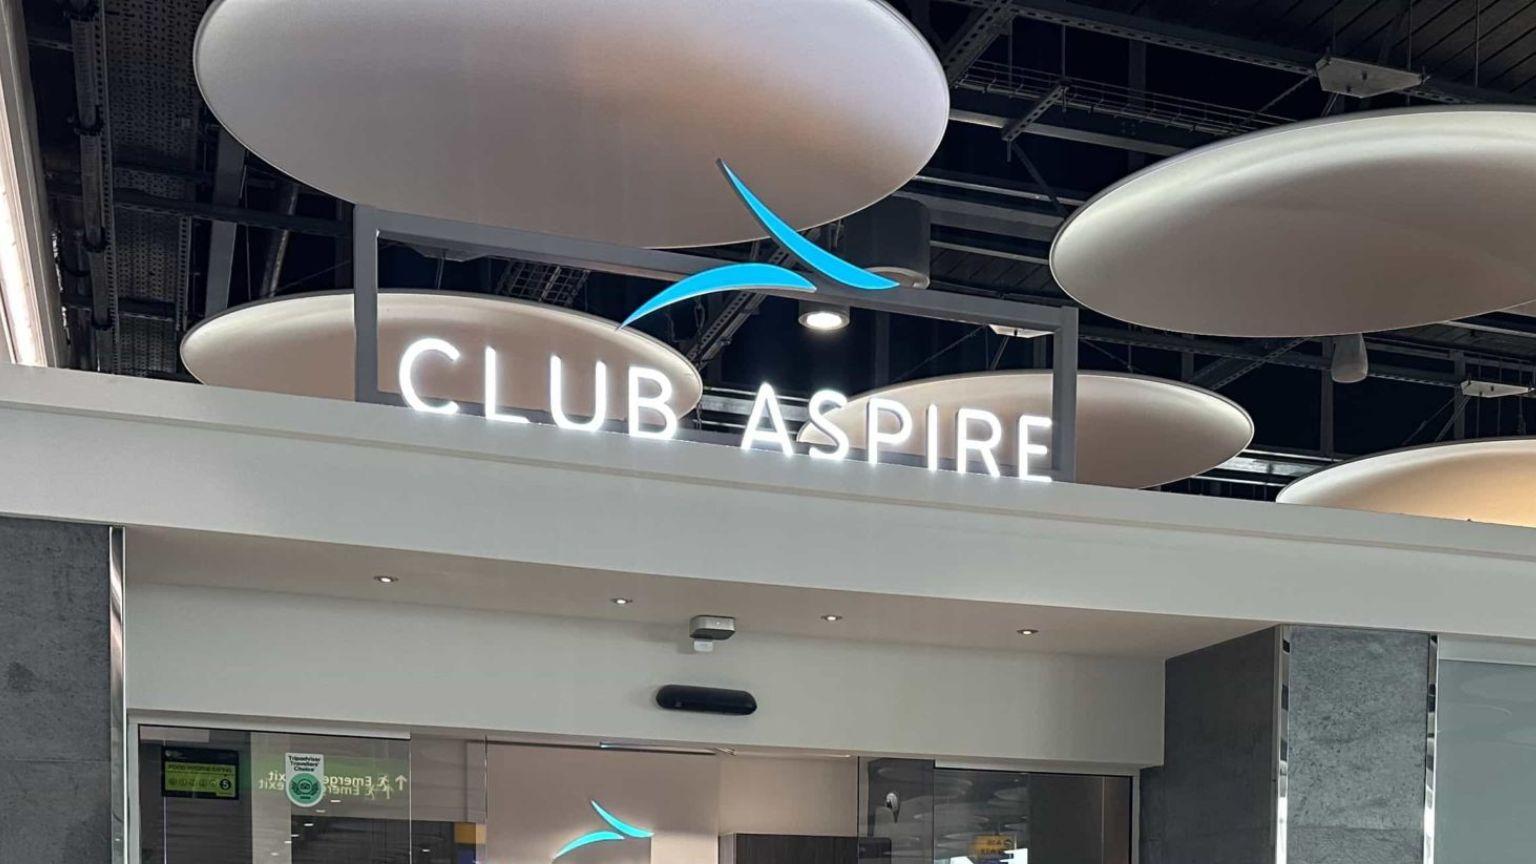 Club Aspire Lounge Heathrow, T5